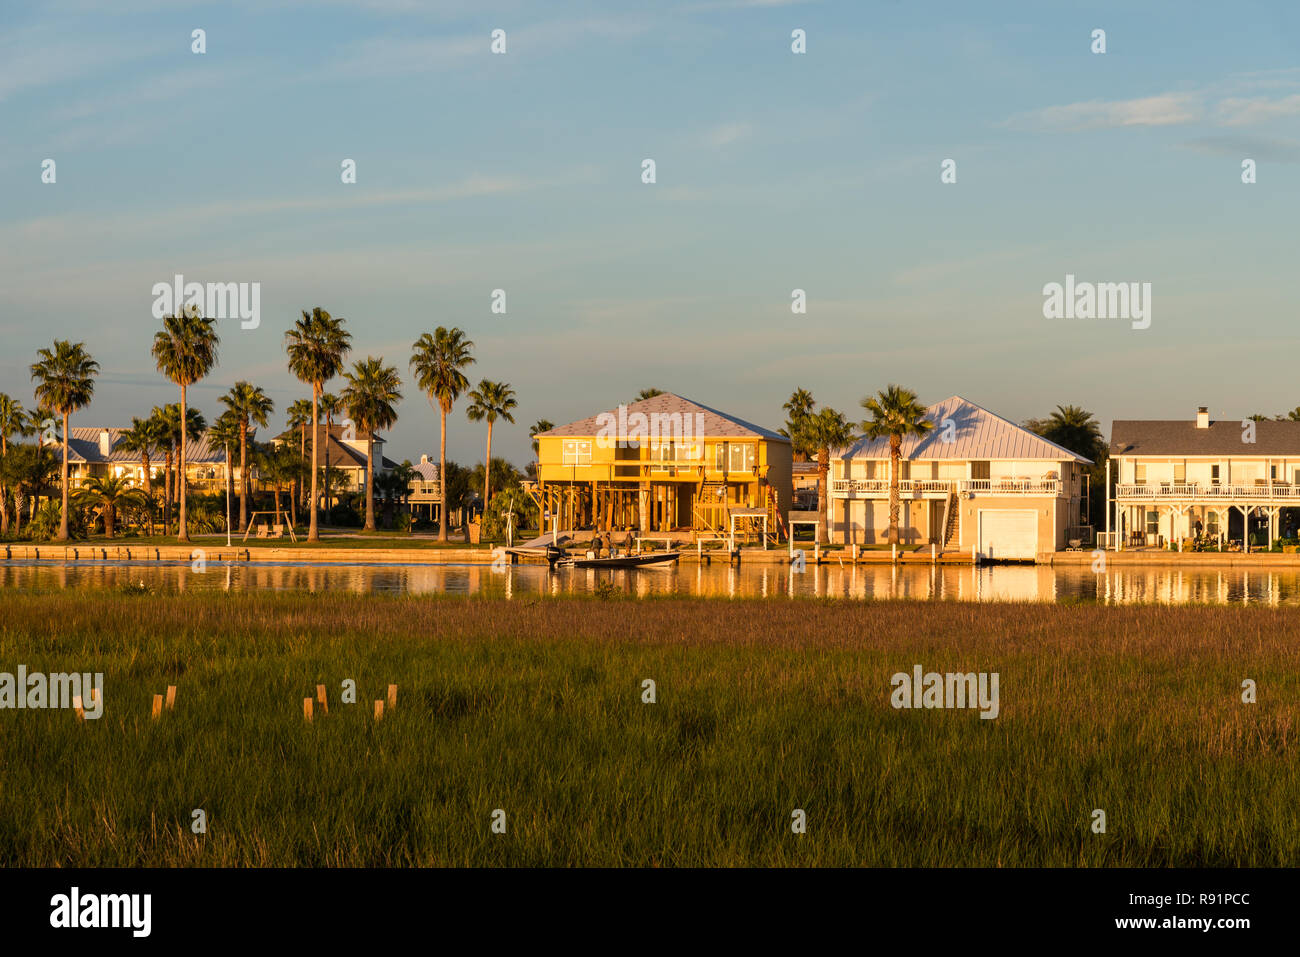 Residential houses encroaching venerable wetlands in upper Gulf coast.   Aransas National Wildlife Refuge, Texas, USA. Stock Photo